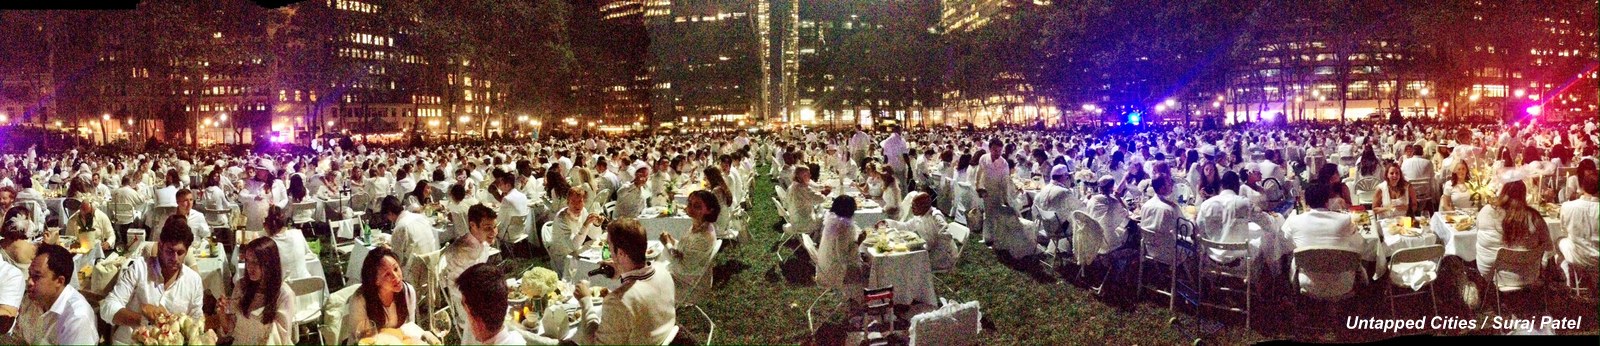 2013 NYC Diner en Blanc-Bryant Park-White Dinner-Flash Mob-September-Panorama-001